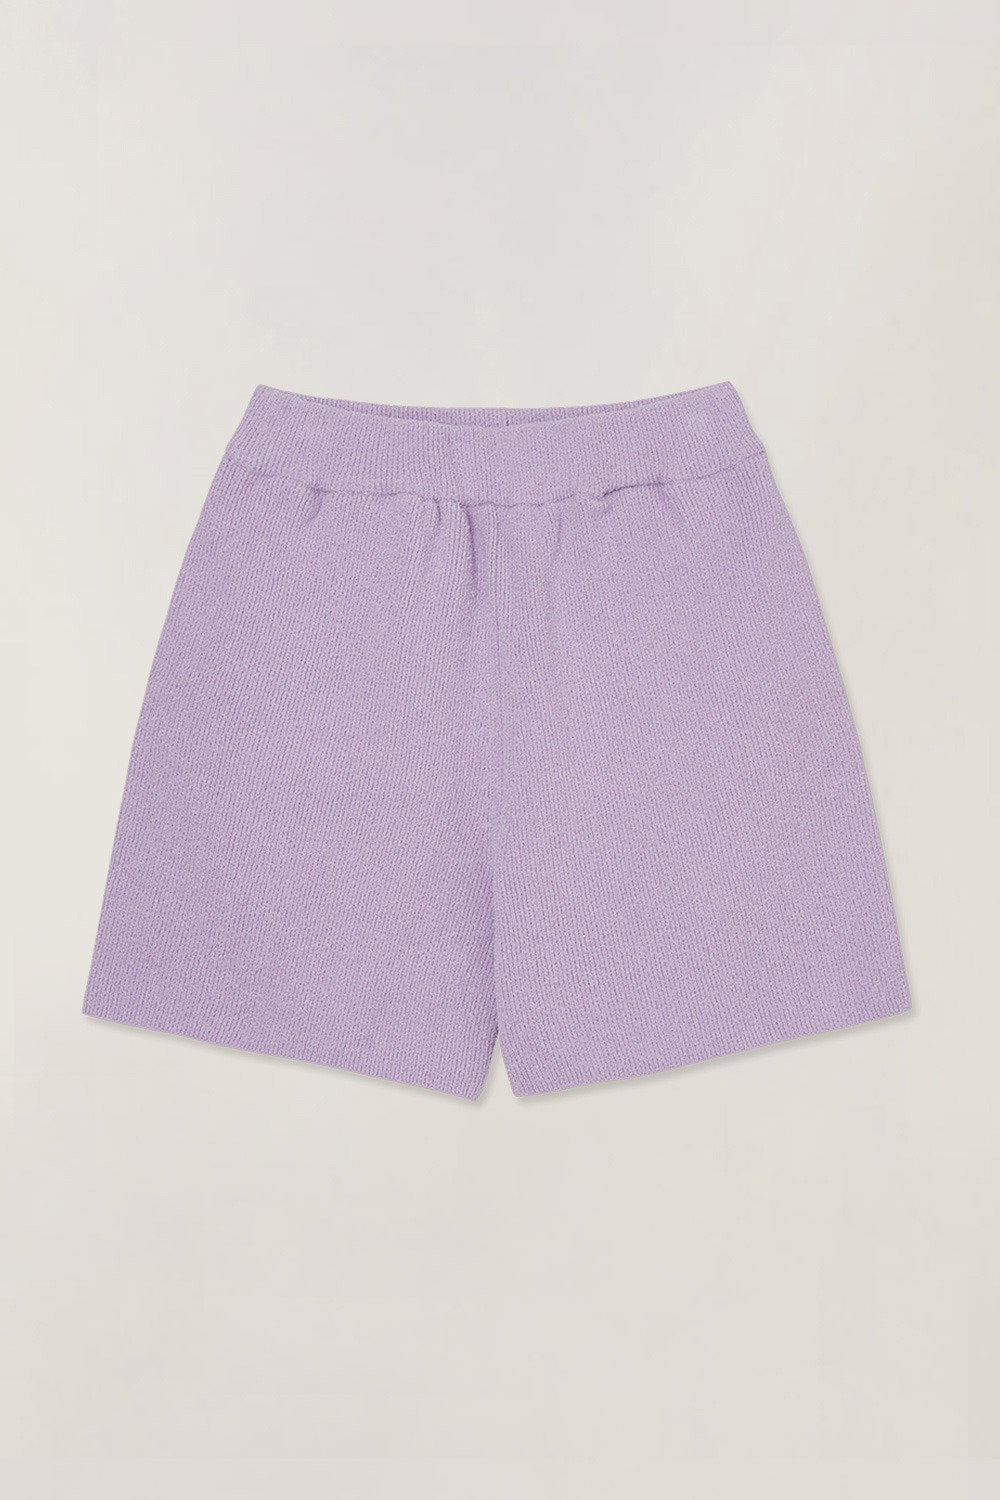 Terric Ribbed Shorts_Lavender